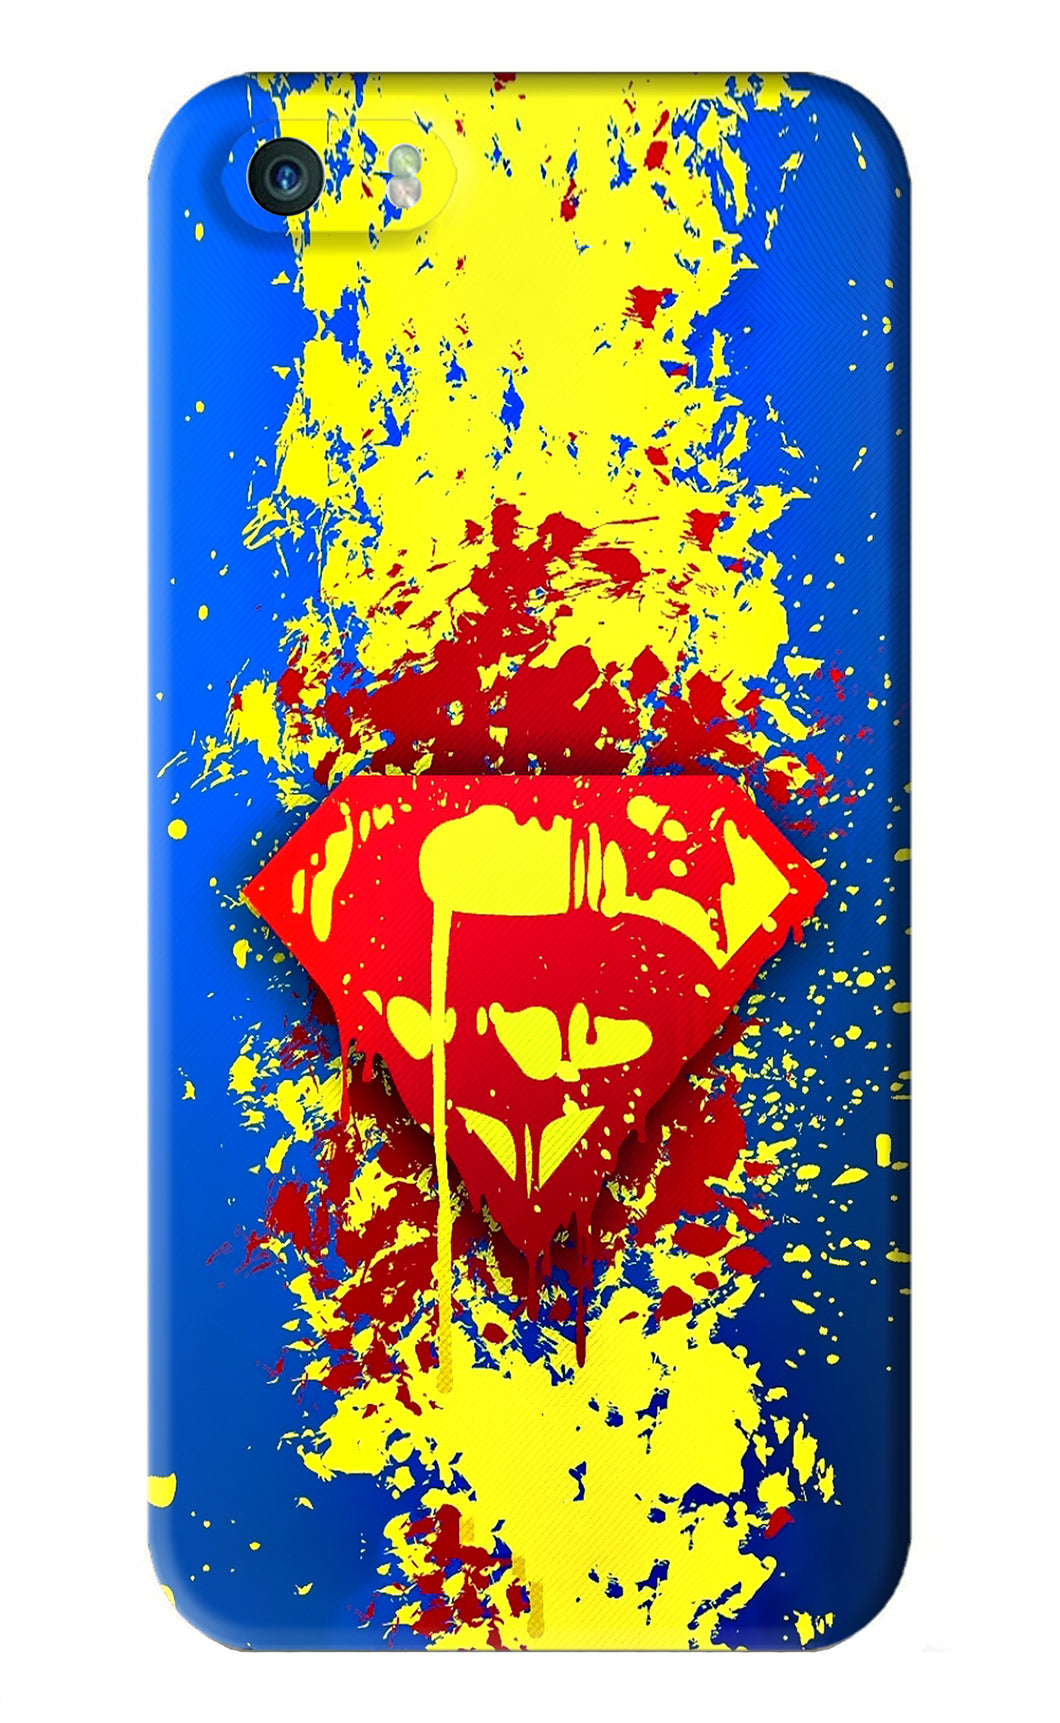 Superman logo iPhone 5 Back Skin Wrap